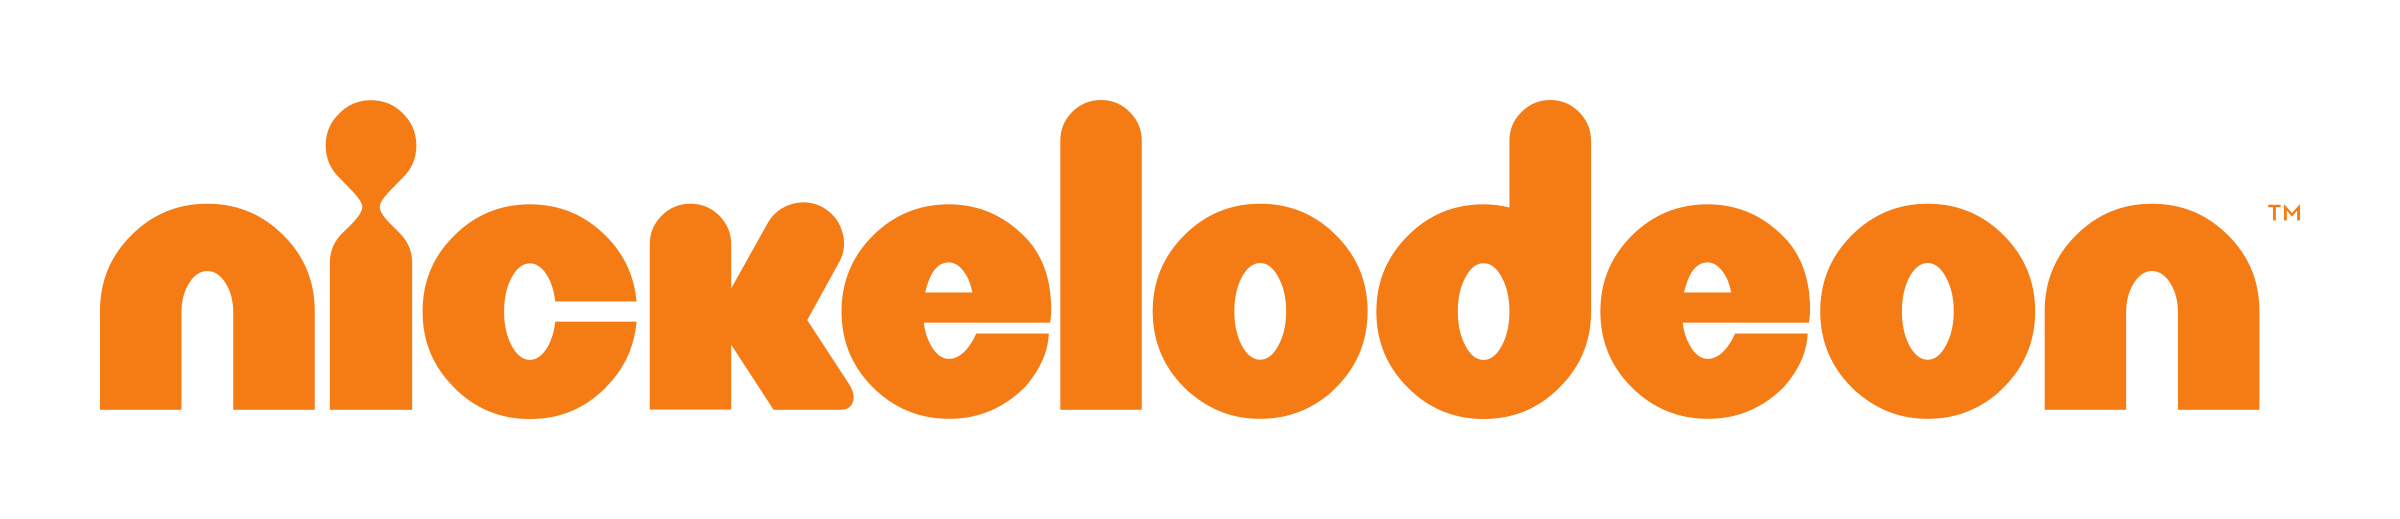 Nickelodoen Logo - Nickelodeon Logo PNG Transparent & SVG Vector - Freebie Supply